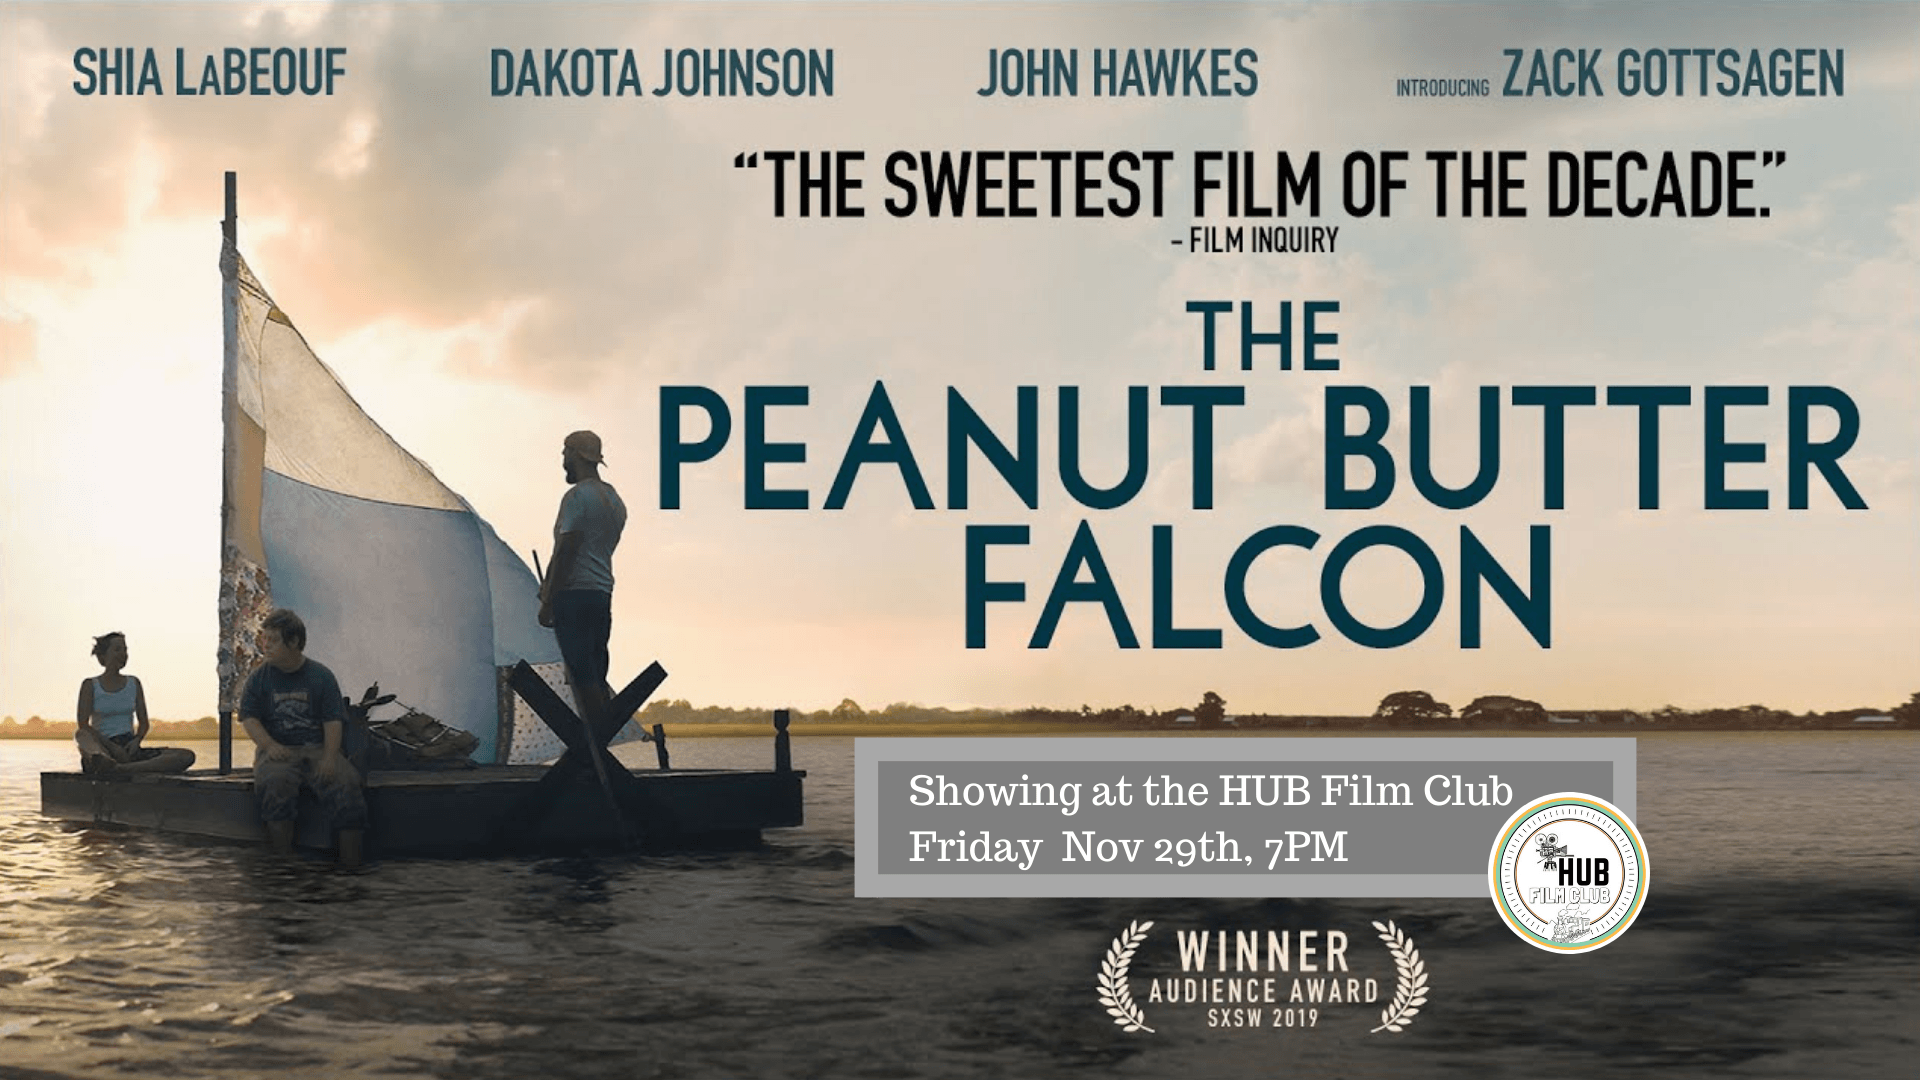 HUB Film Club Screening of “The Peanut Butter Falcon